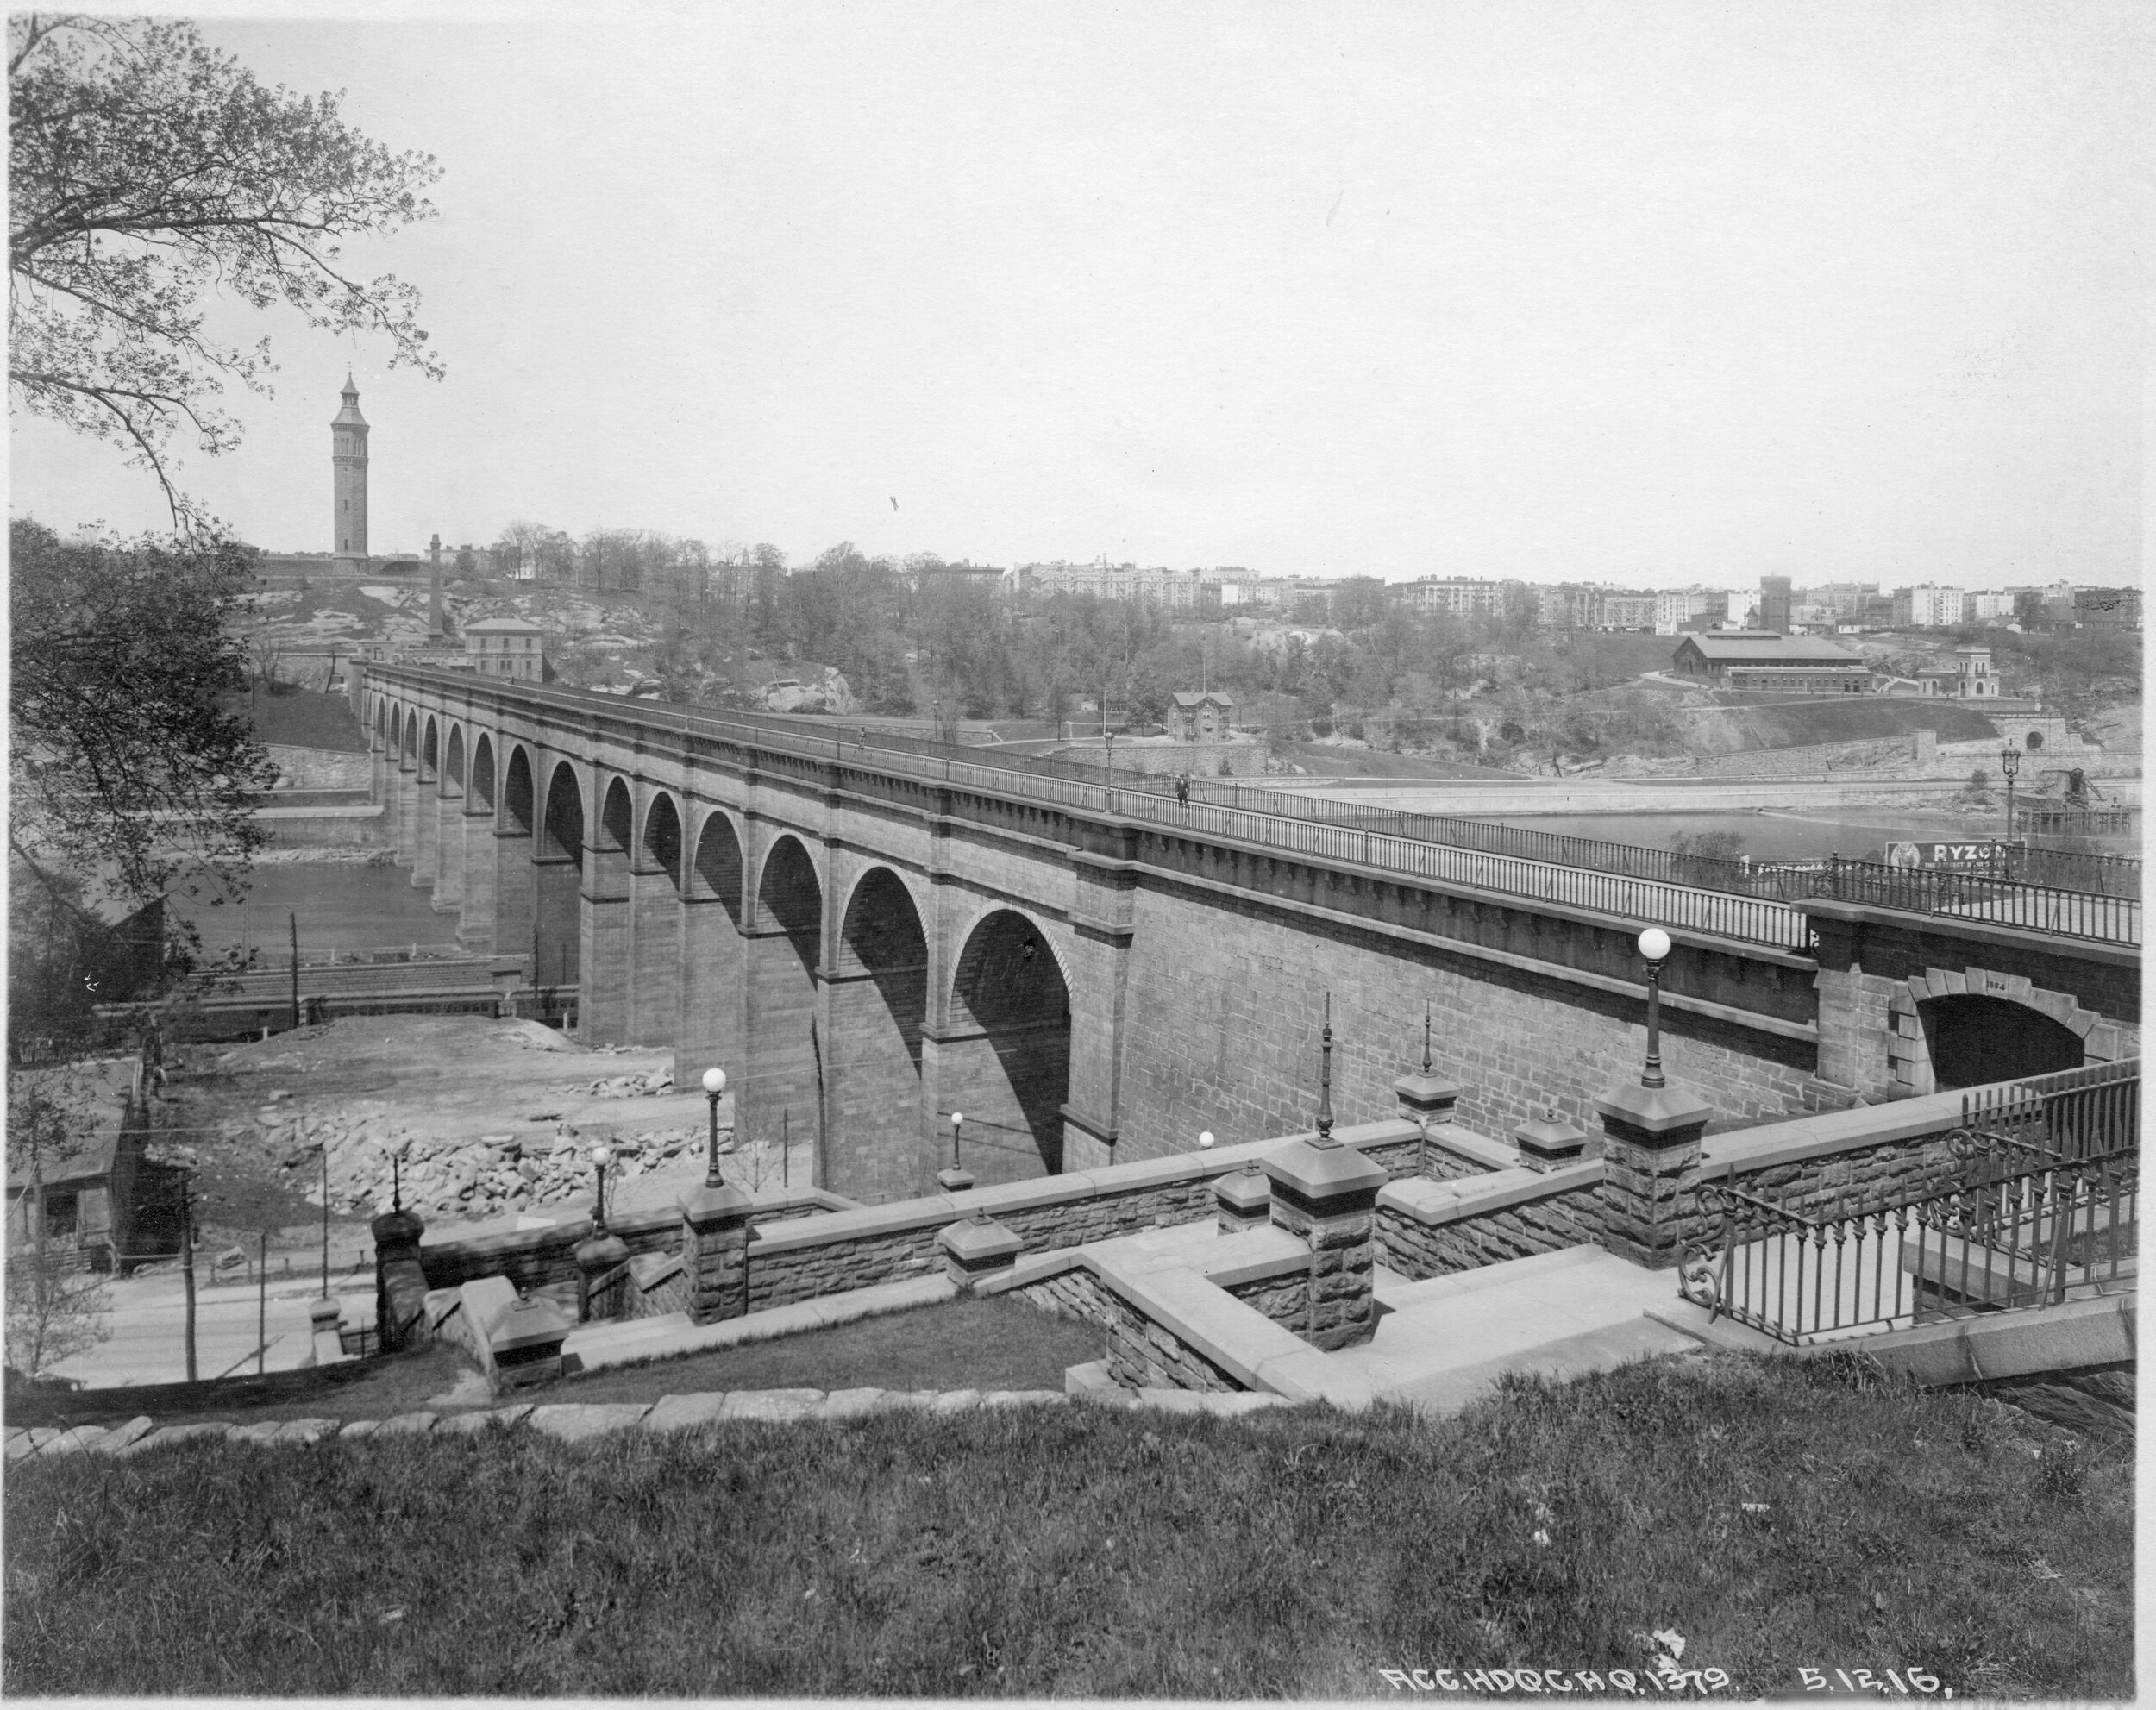 High Bridge - Historic Structure Report